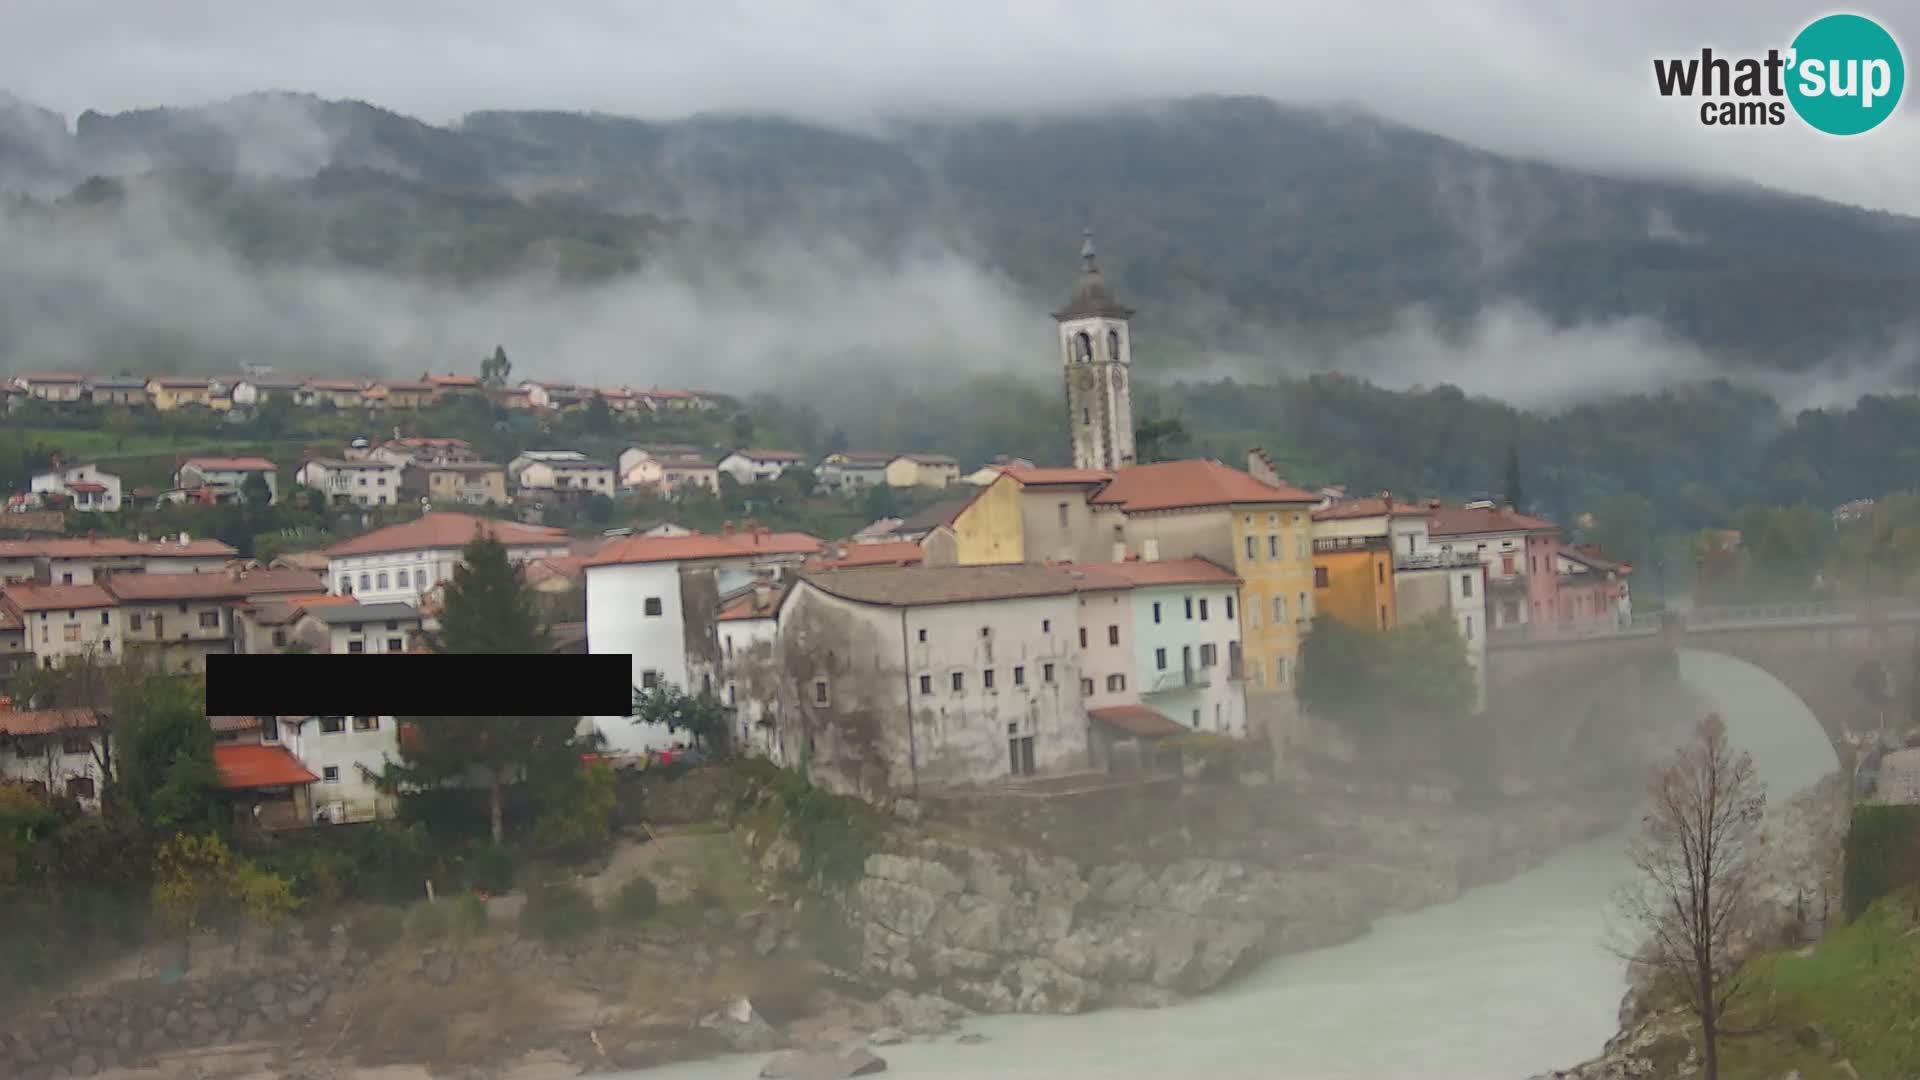 Kanal ob Soči live webcam – Amazing view to old city center and famous bridge on Soča river